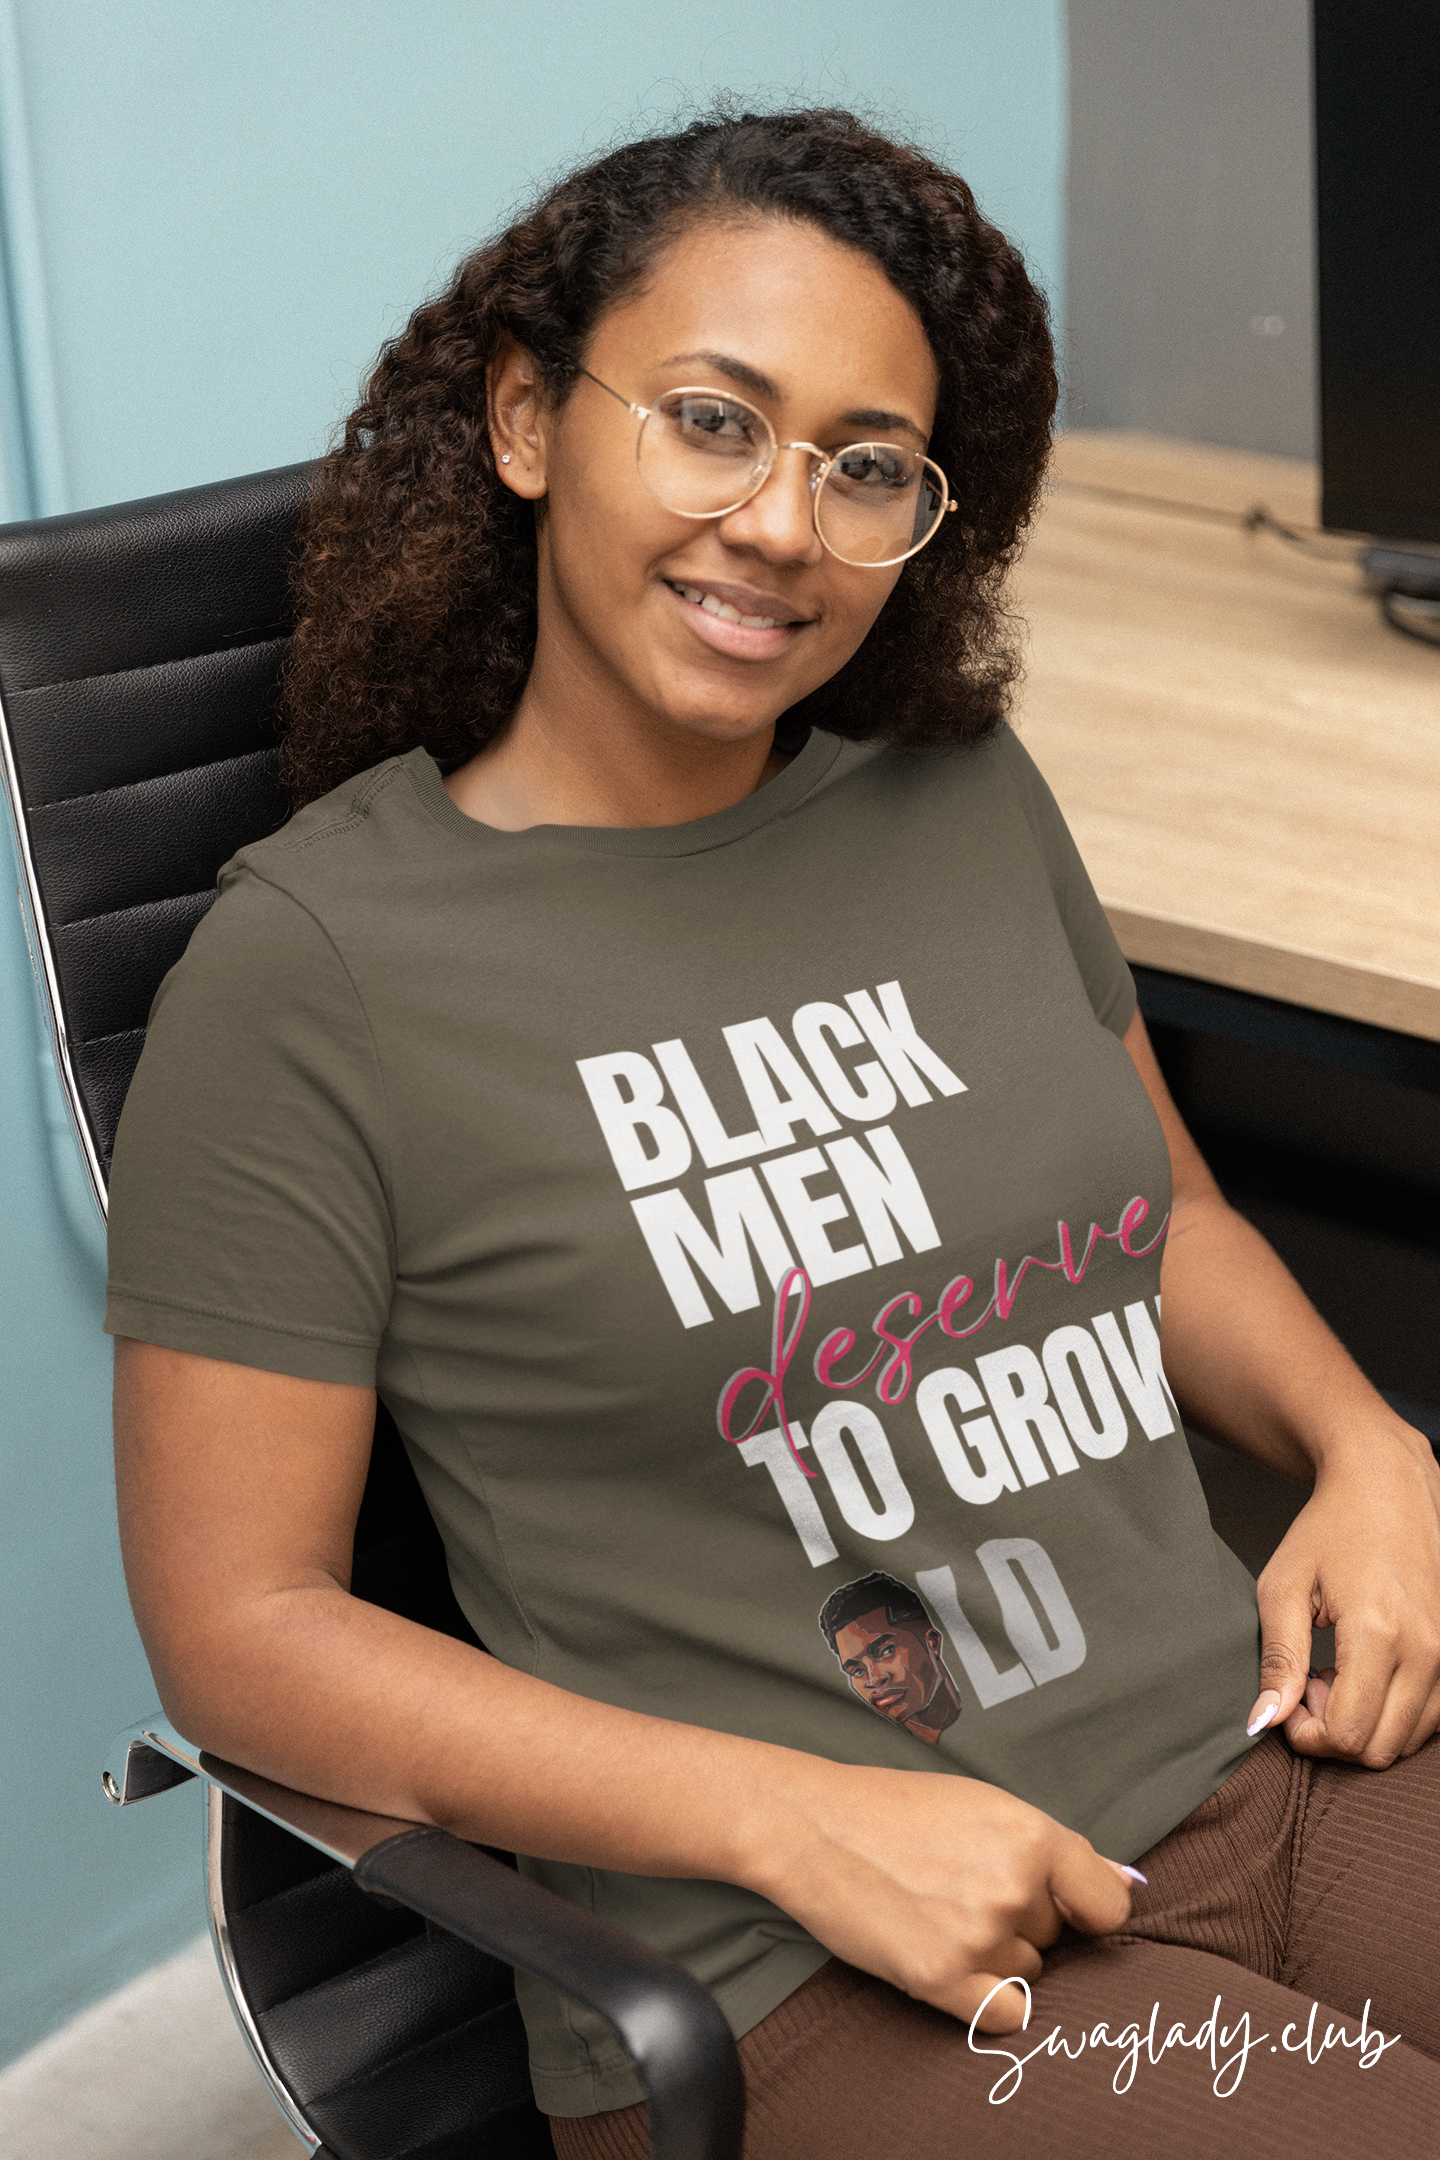 Black Men Deserve to Grow Old Unisex t-shirt